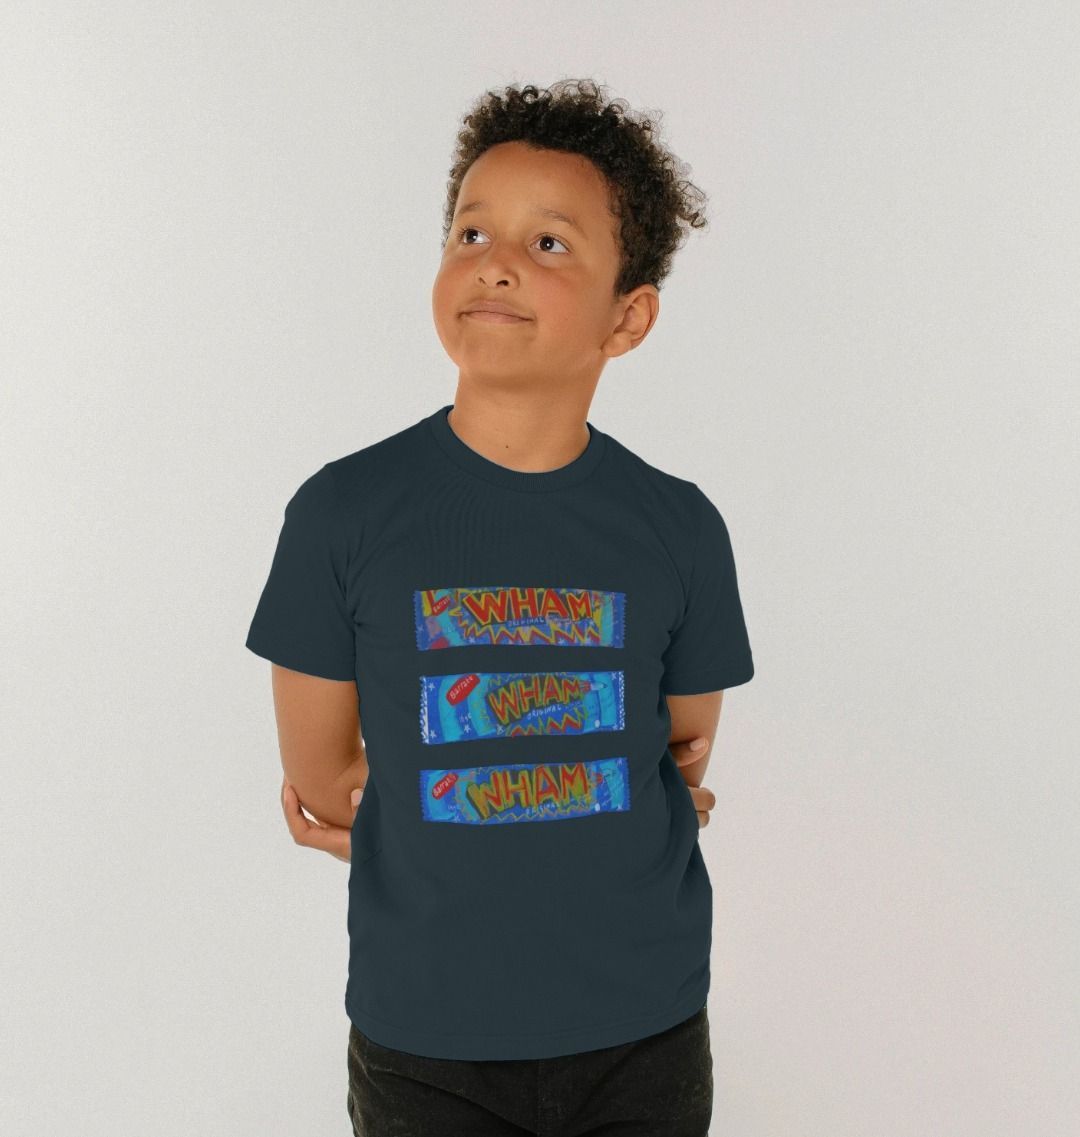 fizz, pop, bang! kid's tee - Printed Kids T-Shirt - Sarah Millin